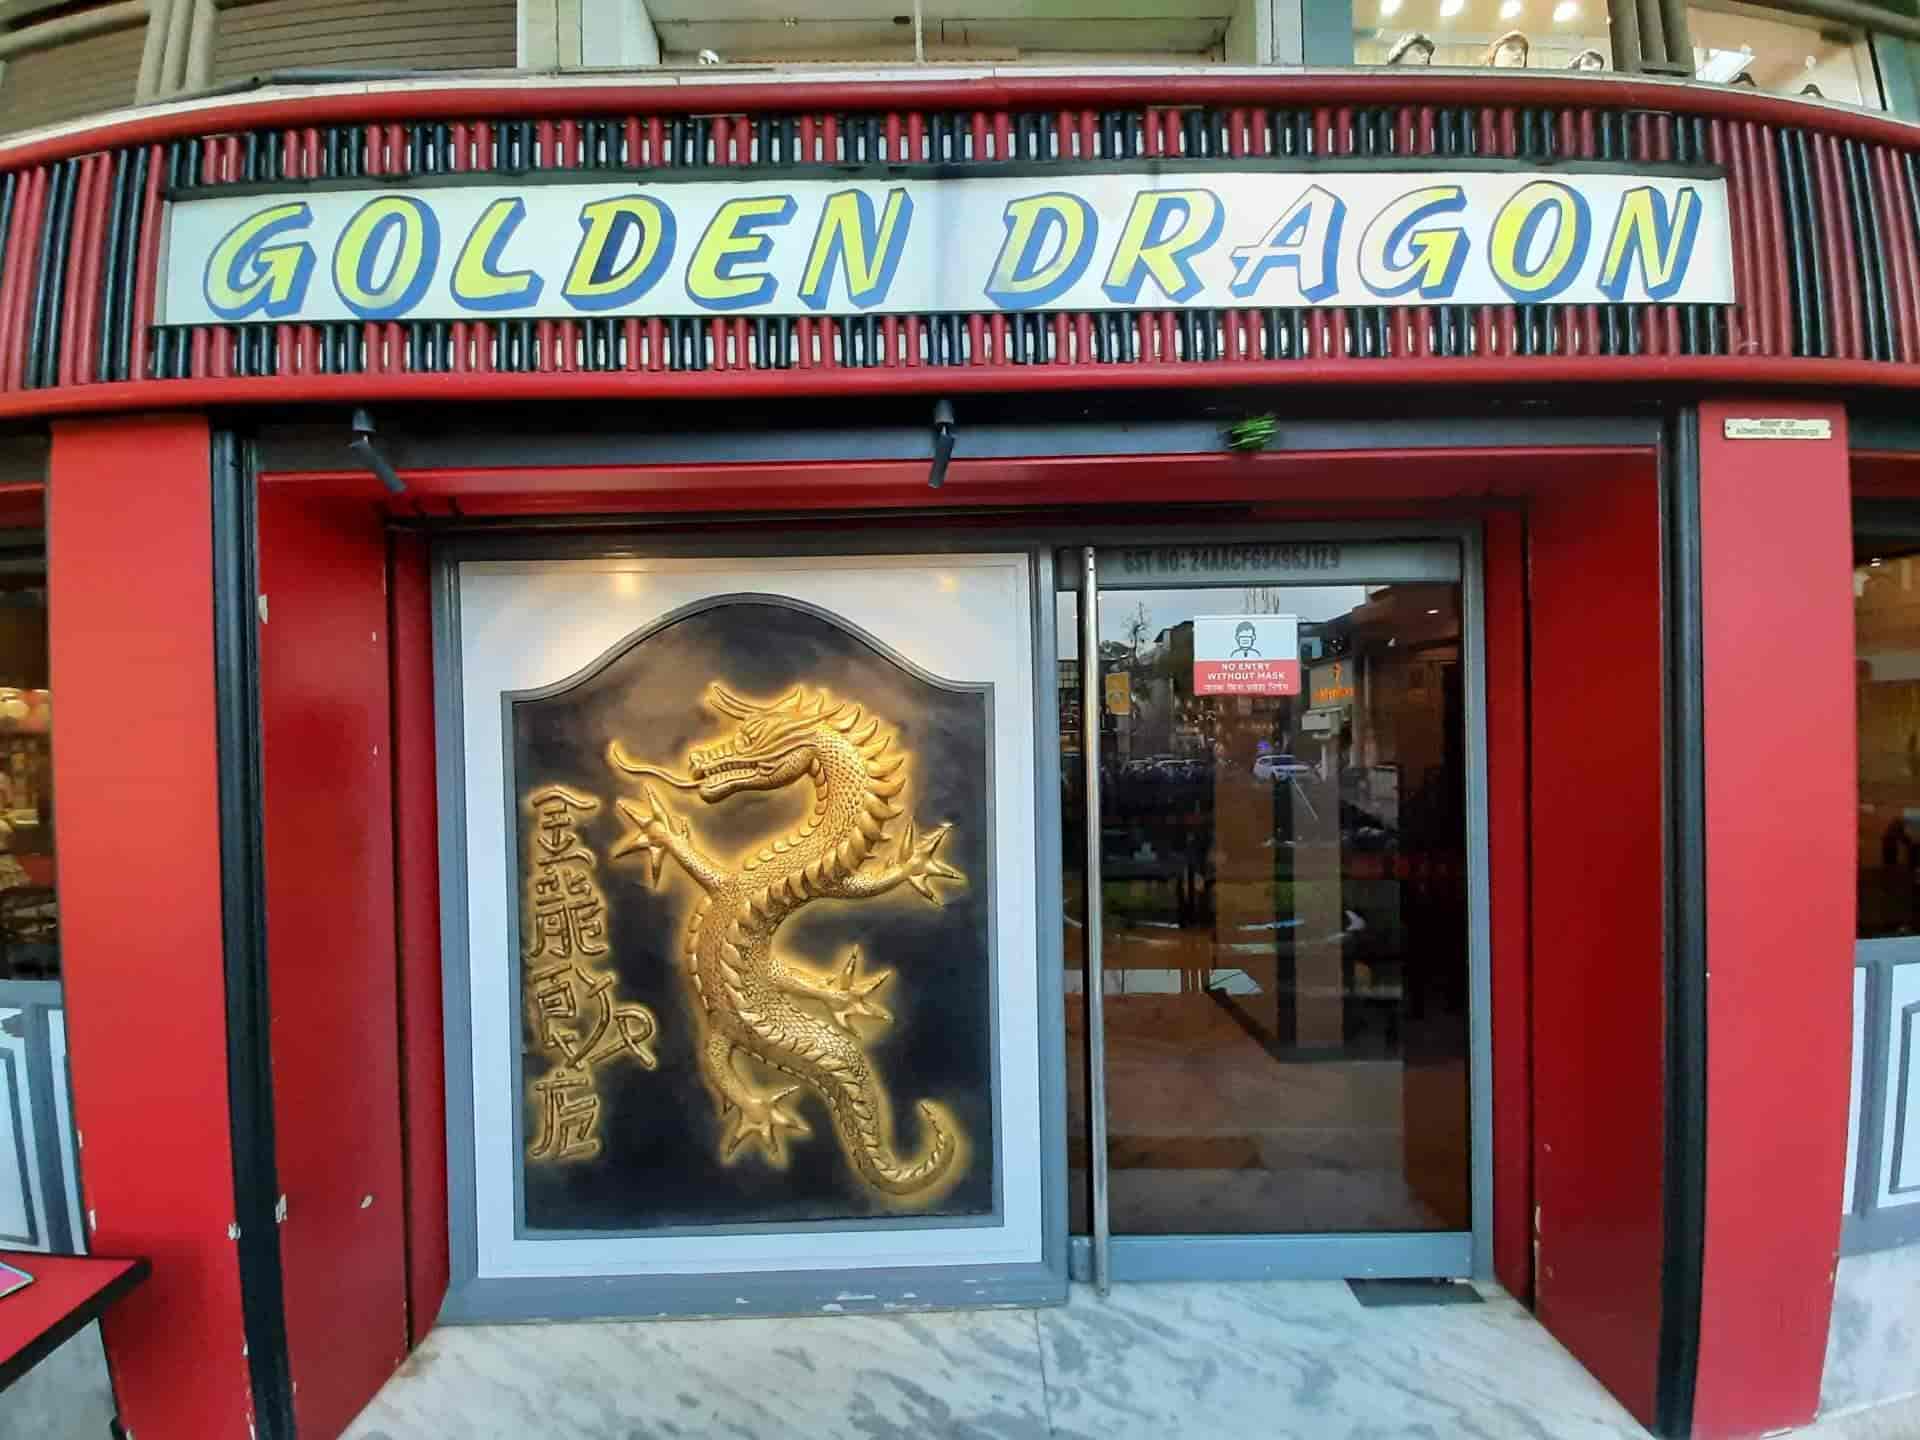 The Golden Dragon Restaurant, Ghoddod Road, Surat - Sea Food, Pan Asian, Chinese  Cuisine Restaurant - Justdial